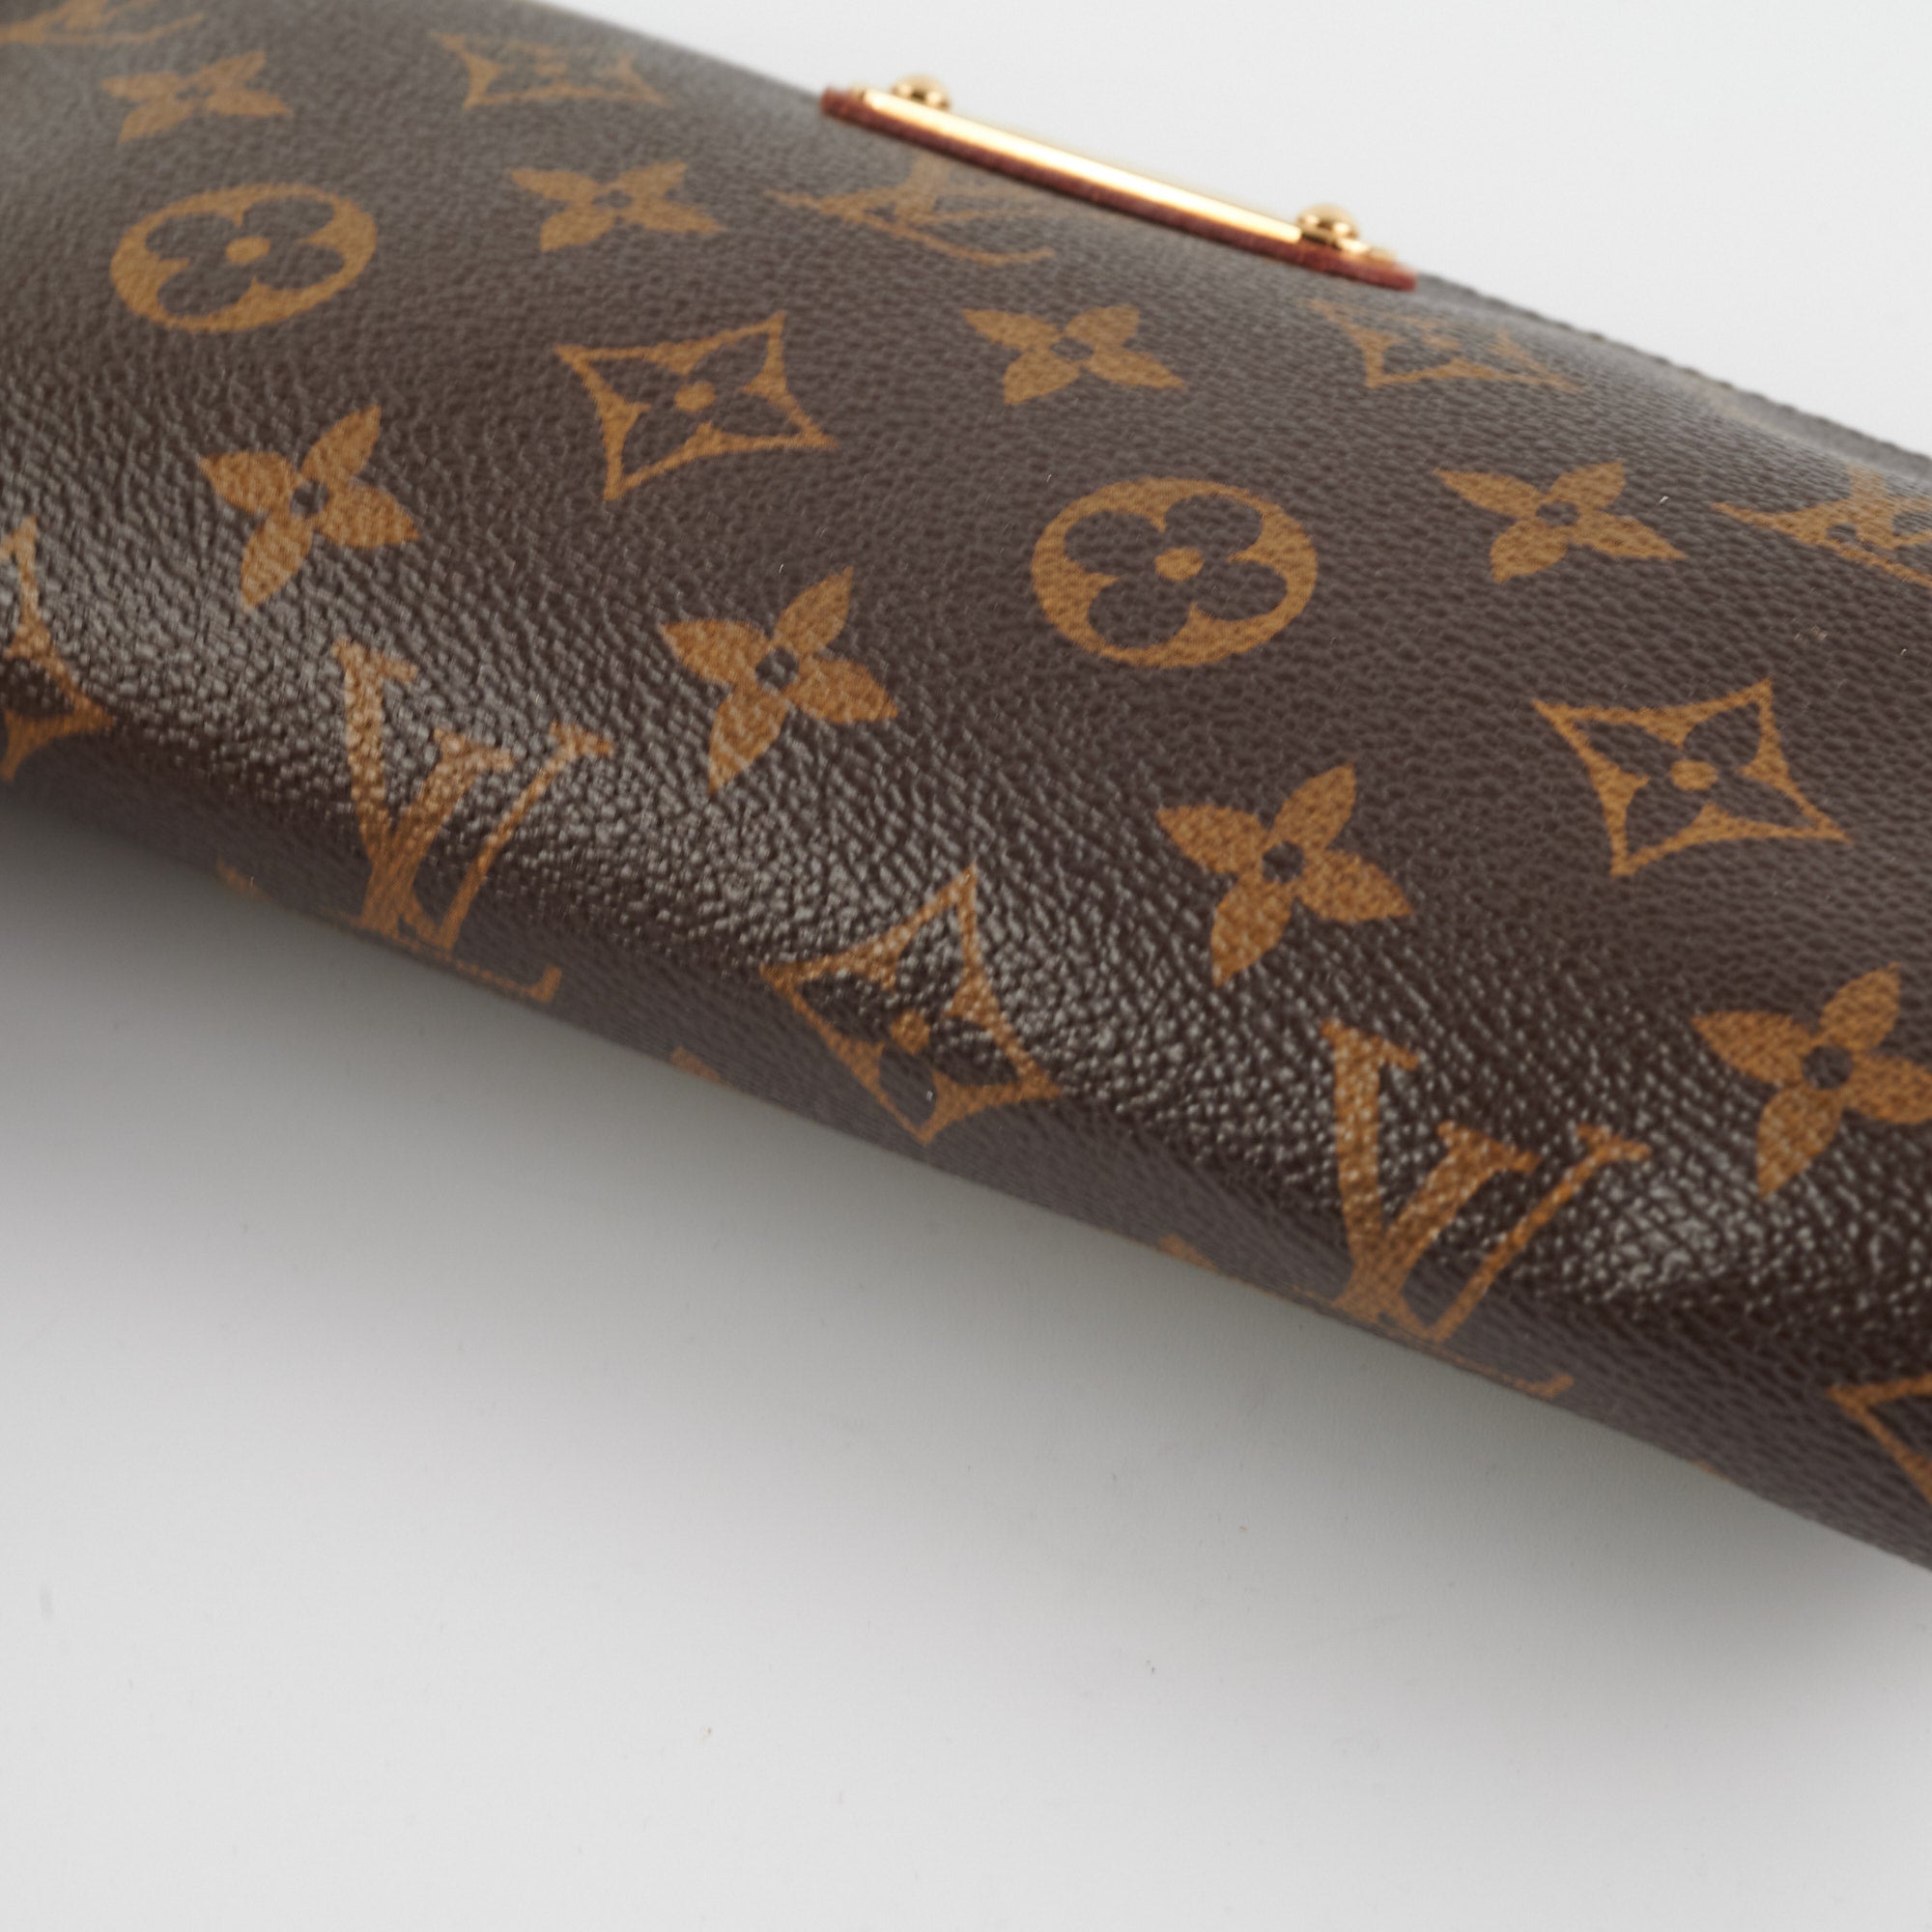 Louis Vuitton Eva Monogram Canvas Clutch Bag - BOPF